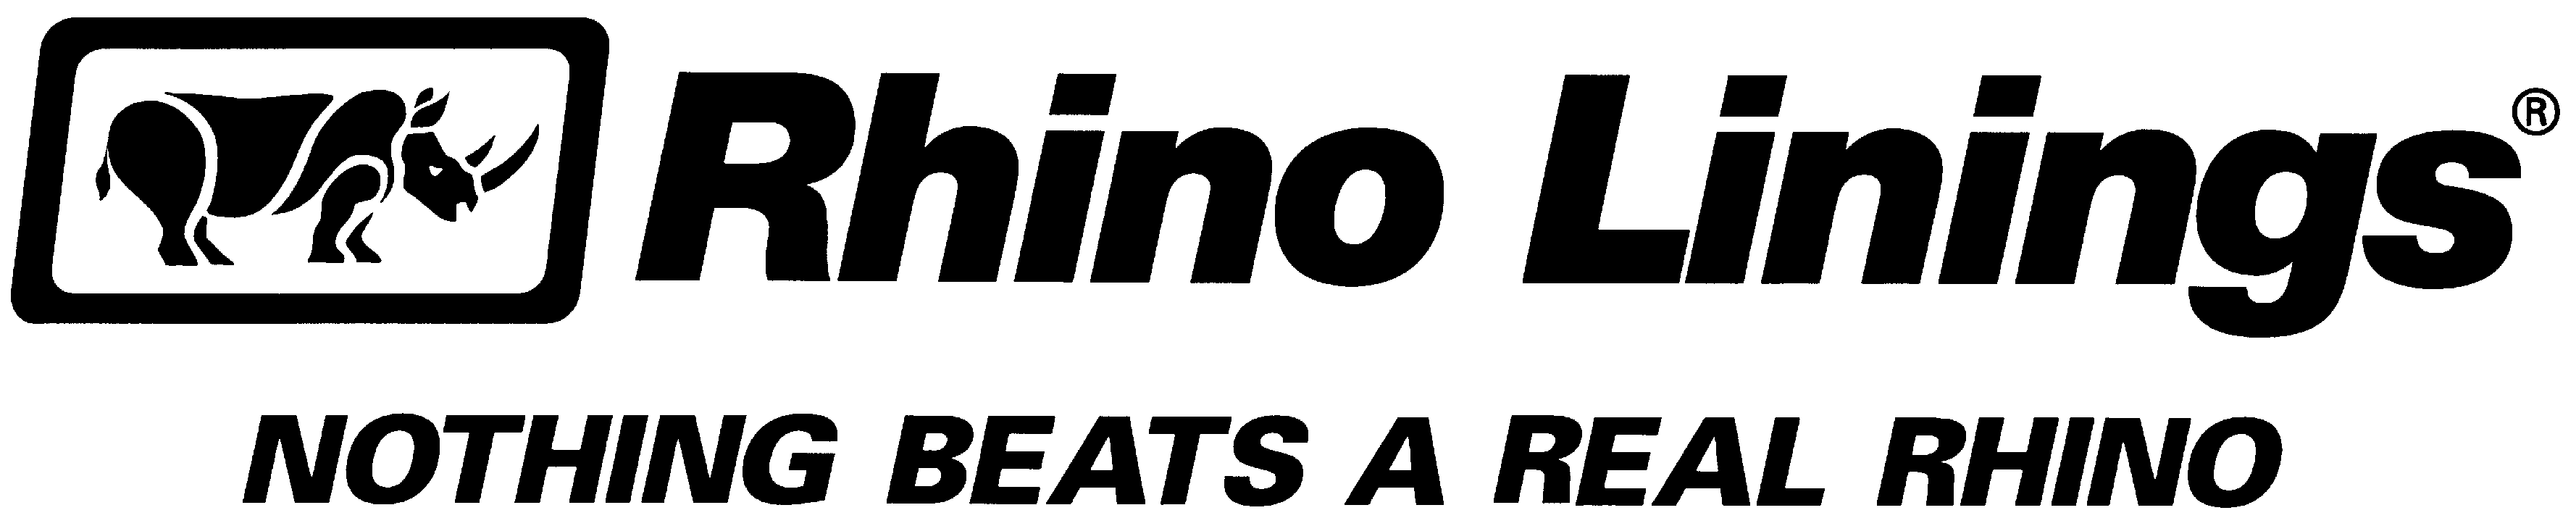 Rhino Linings: Nothing beats a real rhino